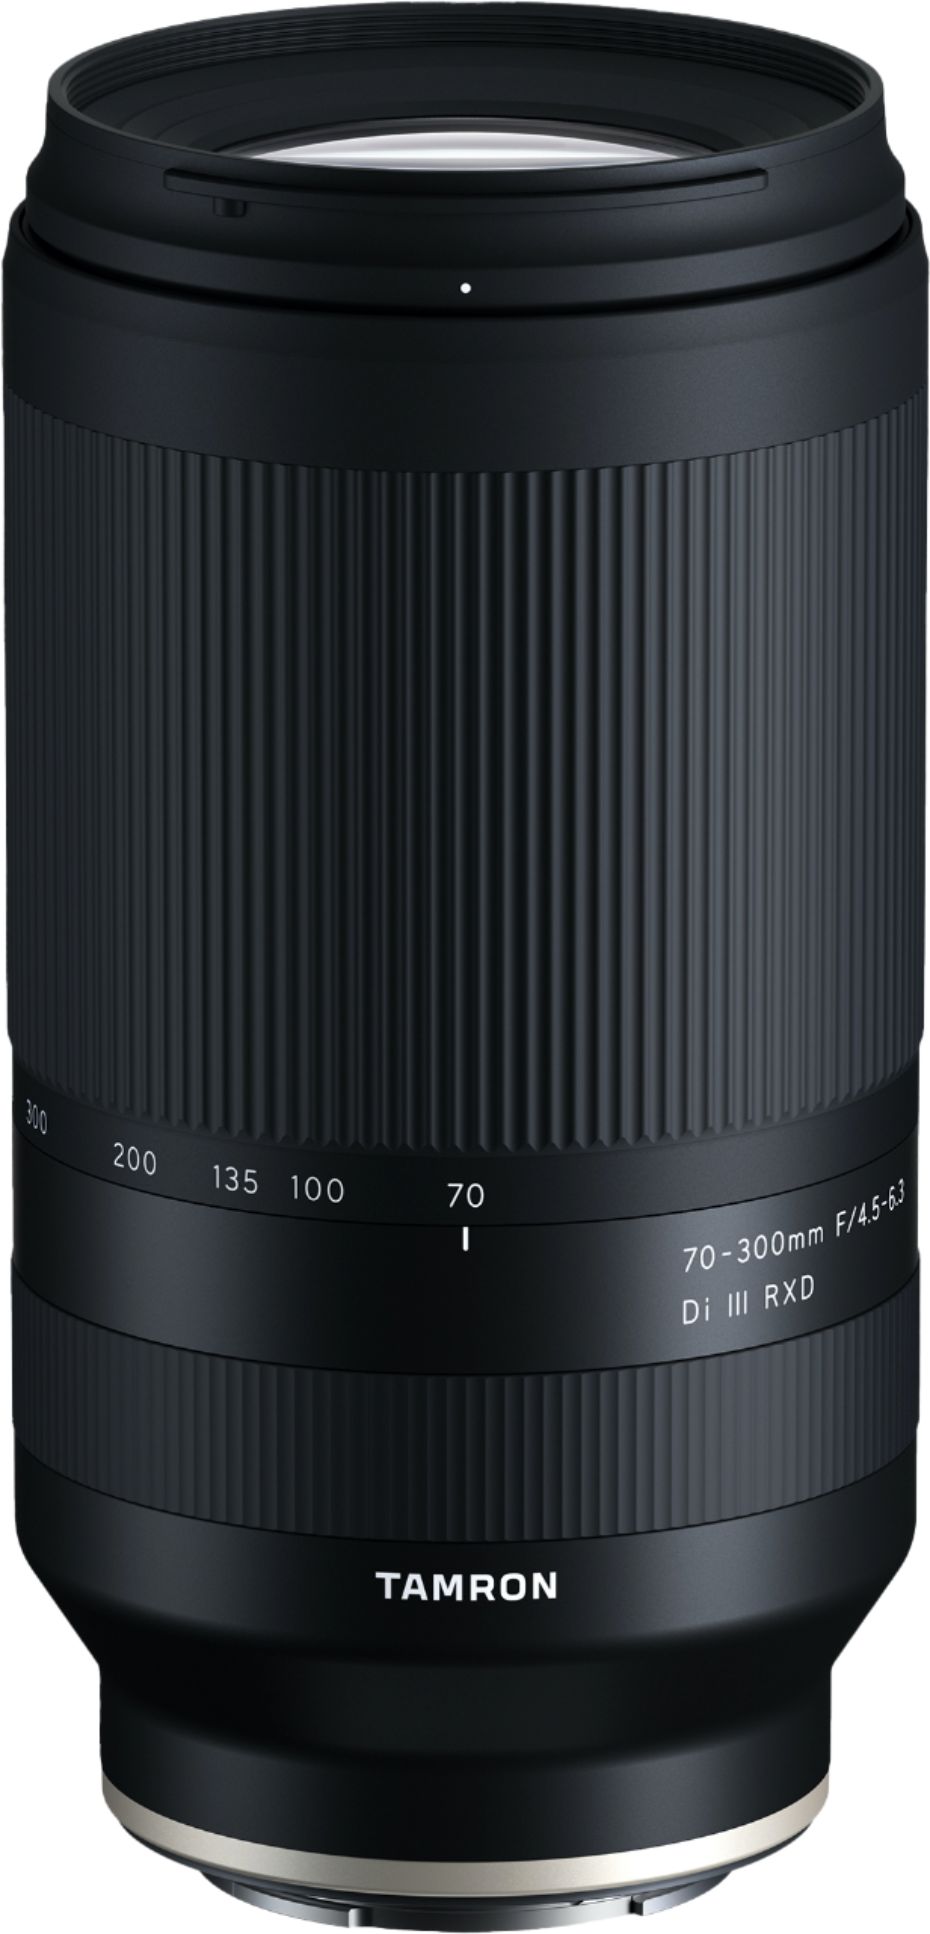 Sony A7 II Camera and Tamron 70-300 F4.5-6.3 Di III Lens